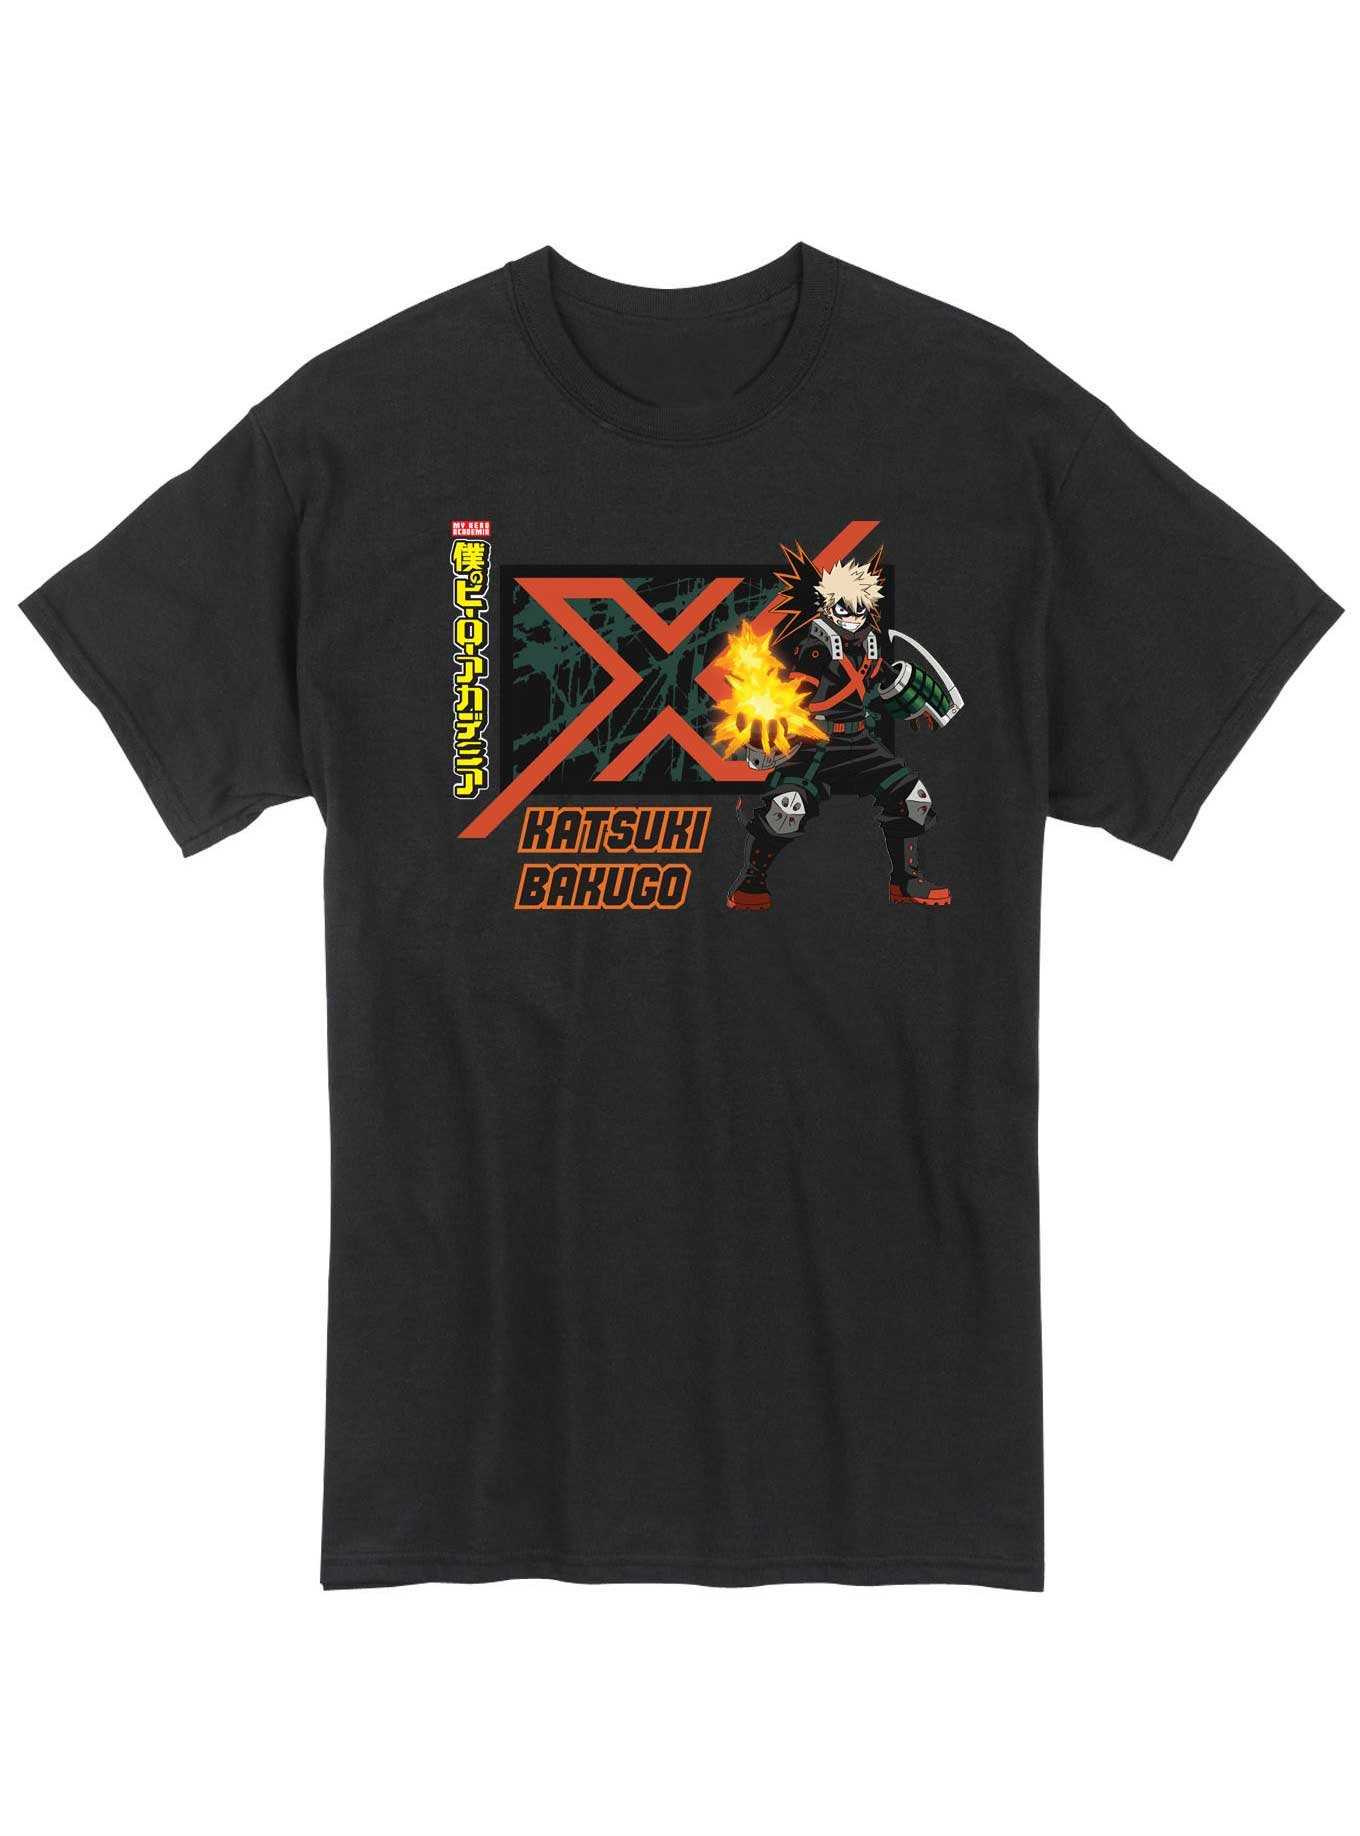 My Hero Academia Bakugo Explosion Quirk T-Shirt, , hi-res